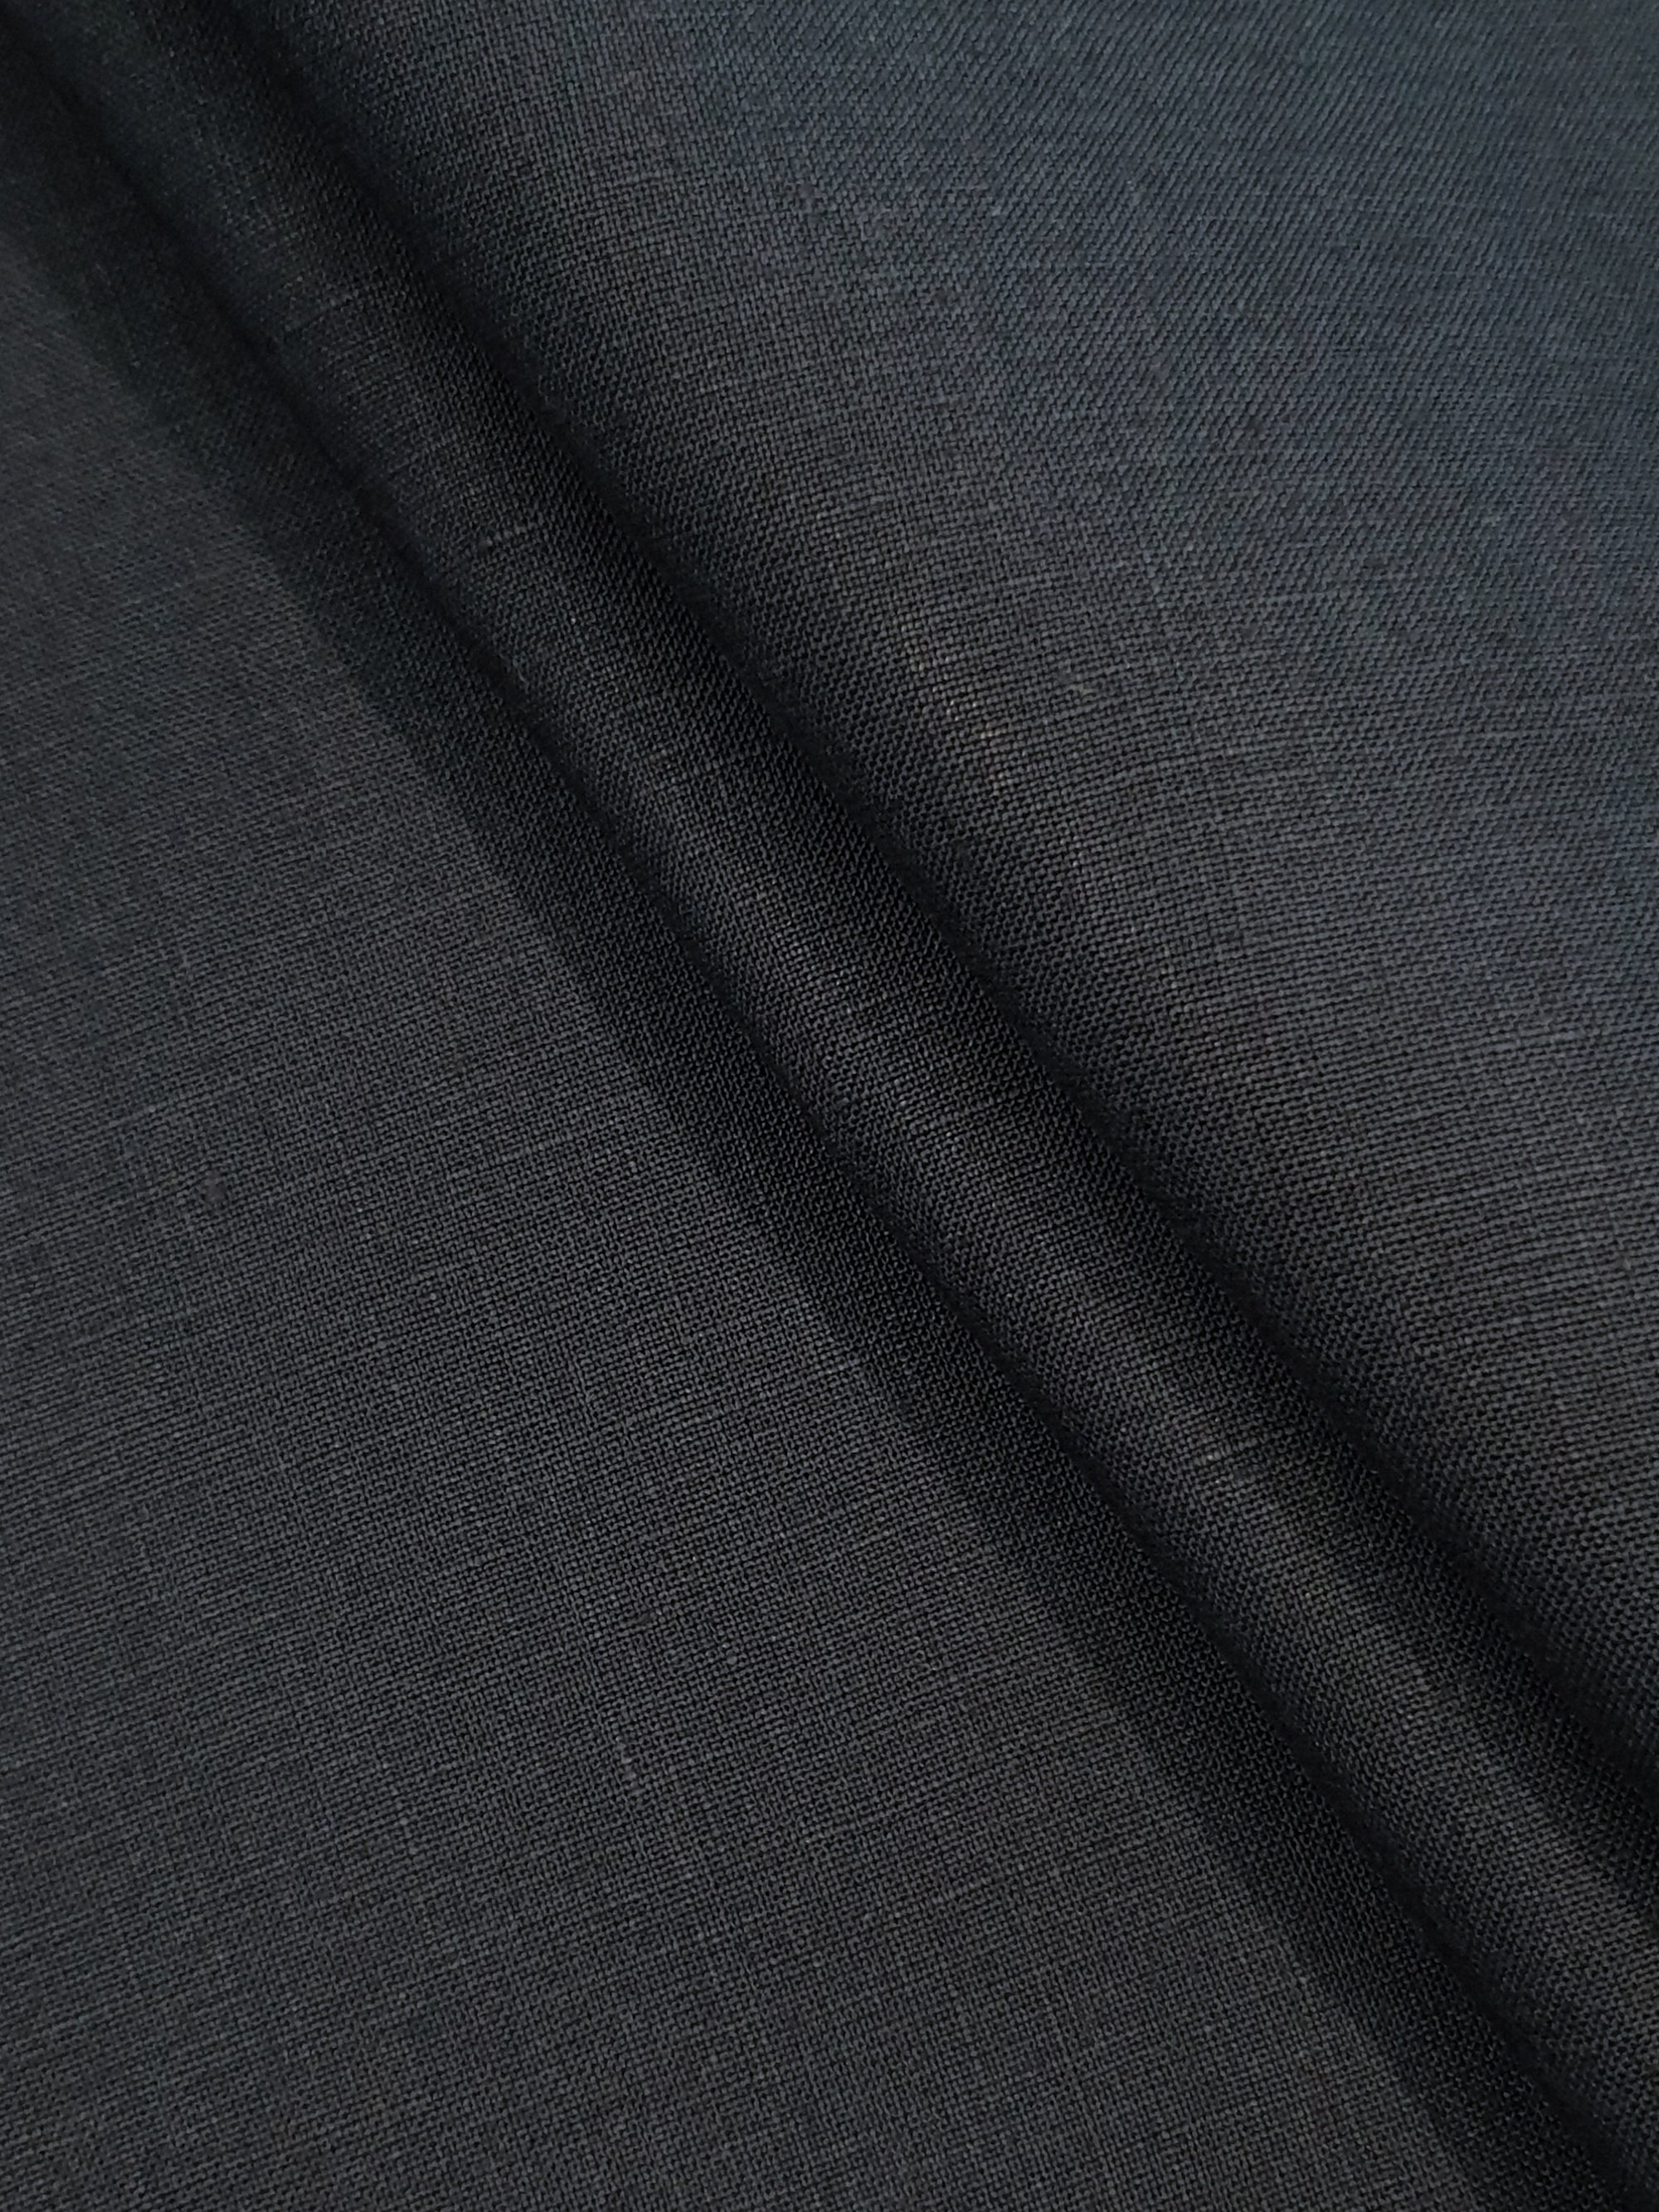 950.059 Dark Navy Irish Linen Suiting Fabrics